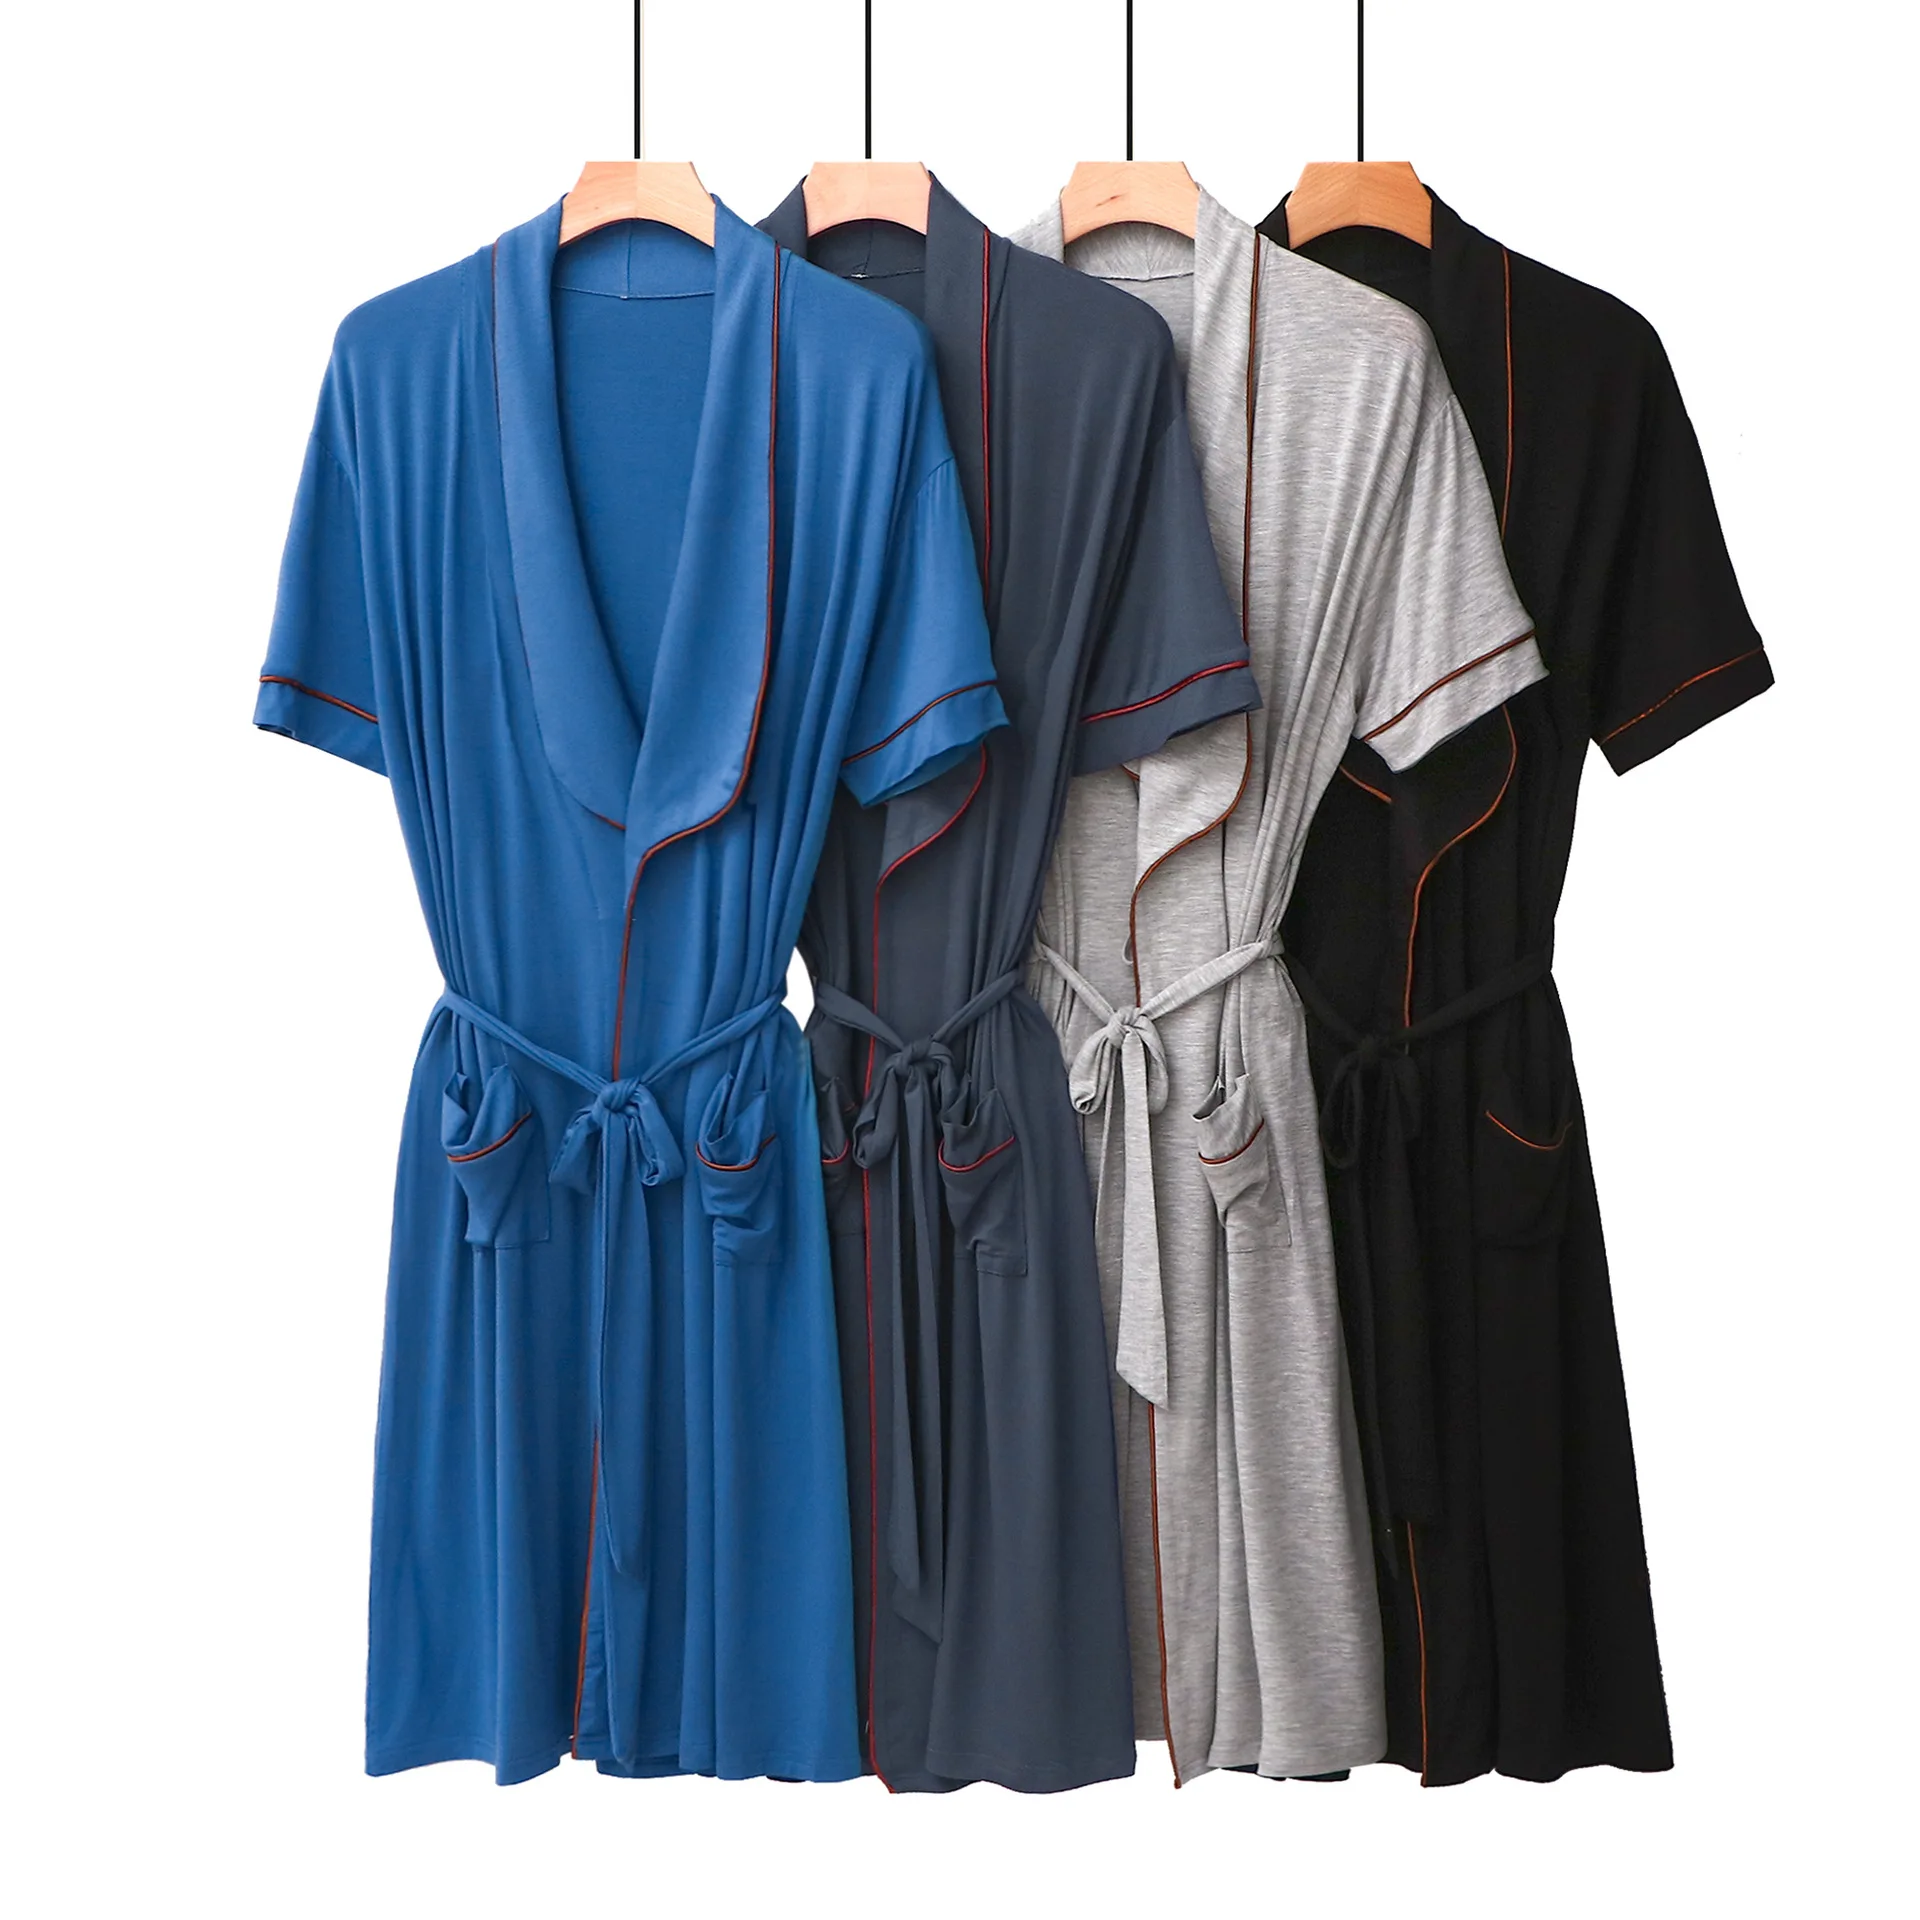 Fdfklak Modal Short Sleeve Robe For Men Multi Colors 3XL Sizes Kimono Home Clothes Cardigan Bath Robe Summer Long Bathrobe